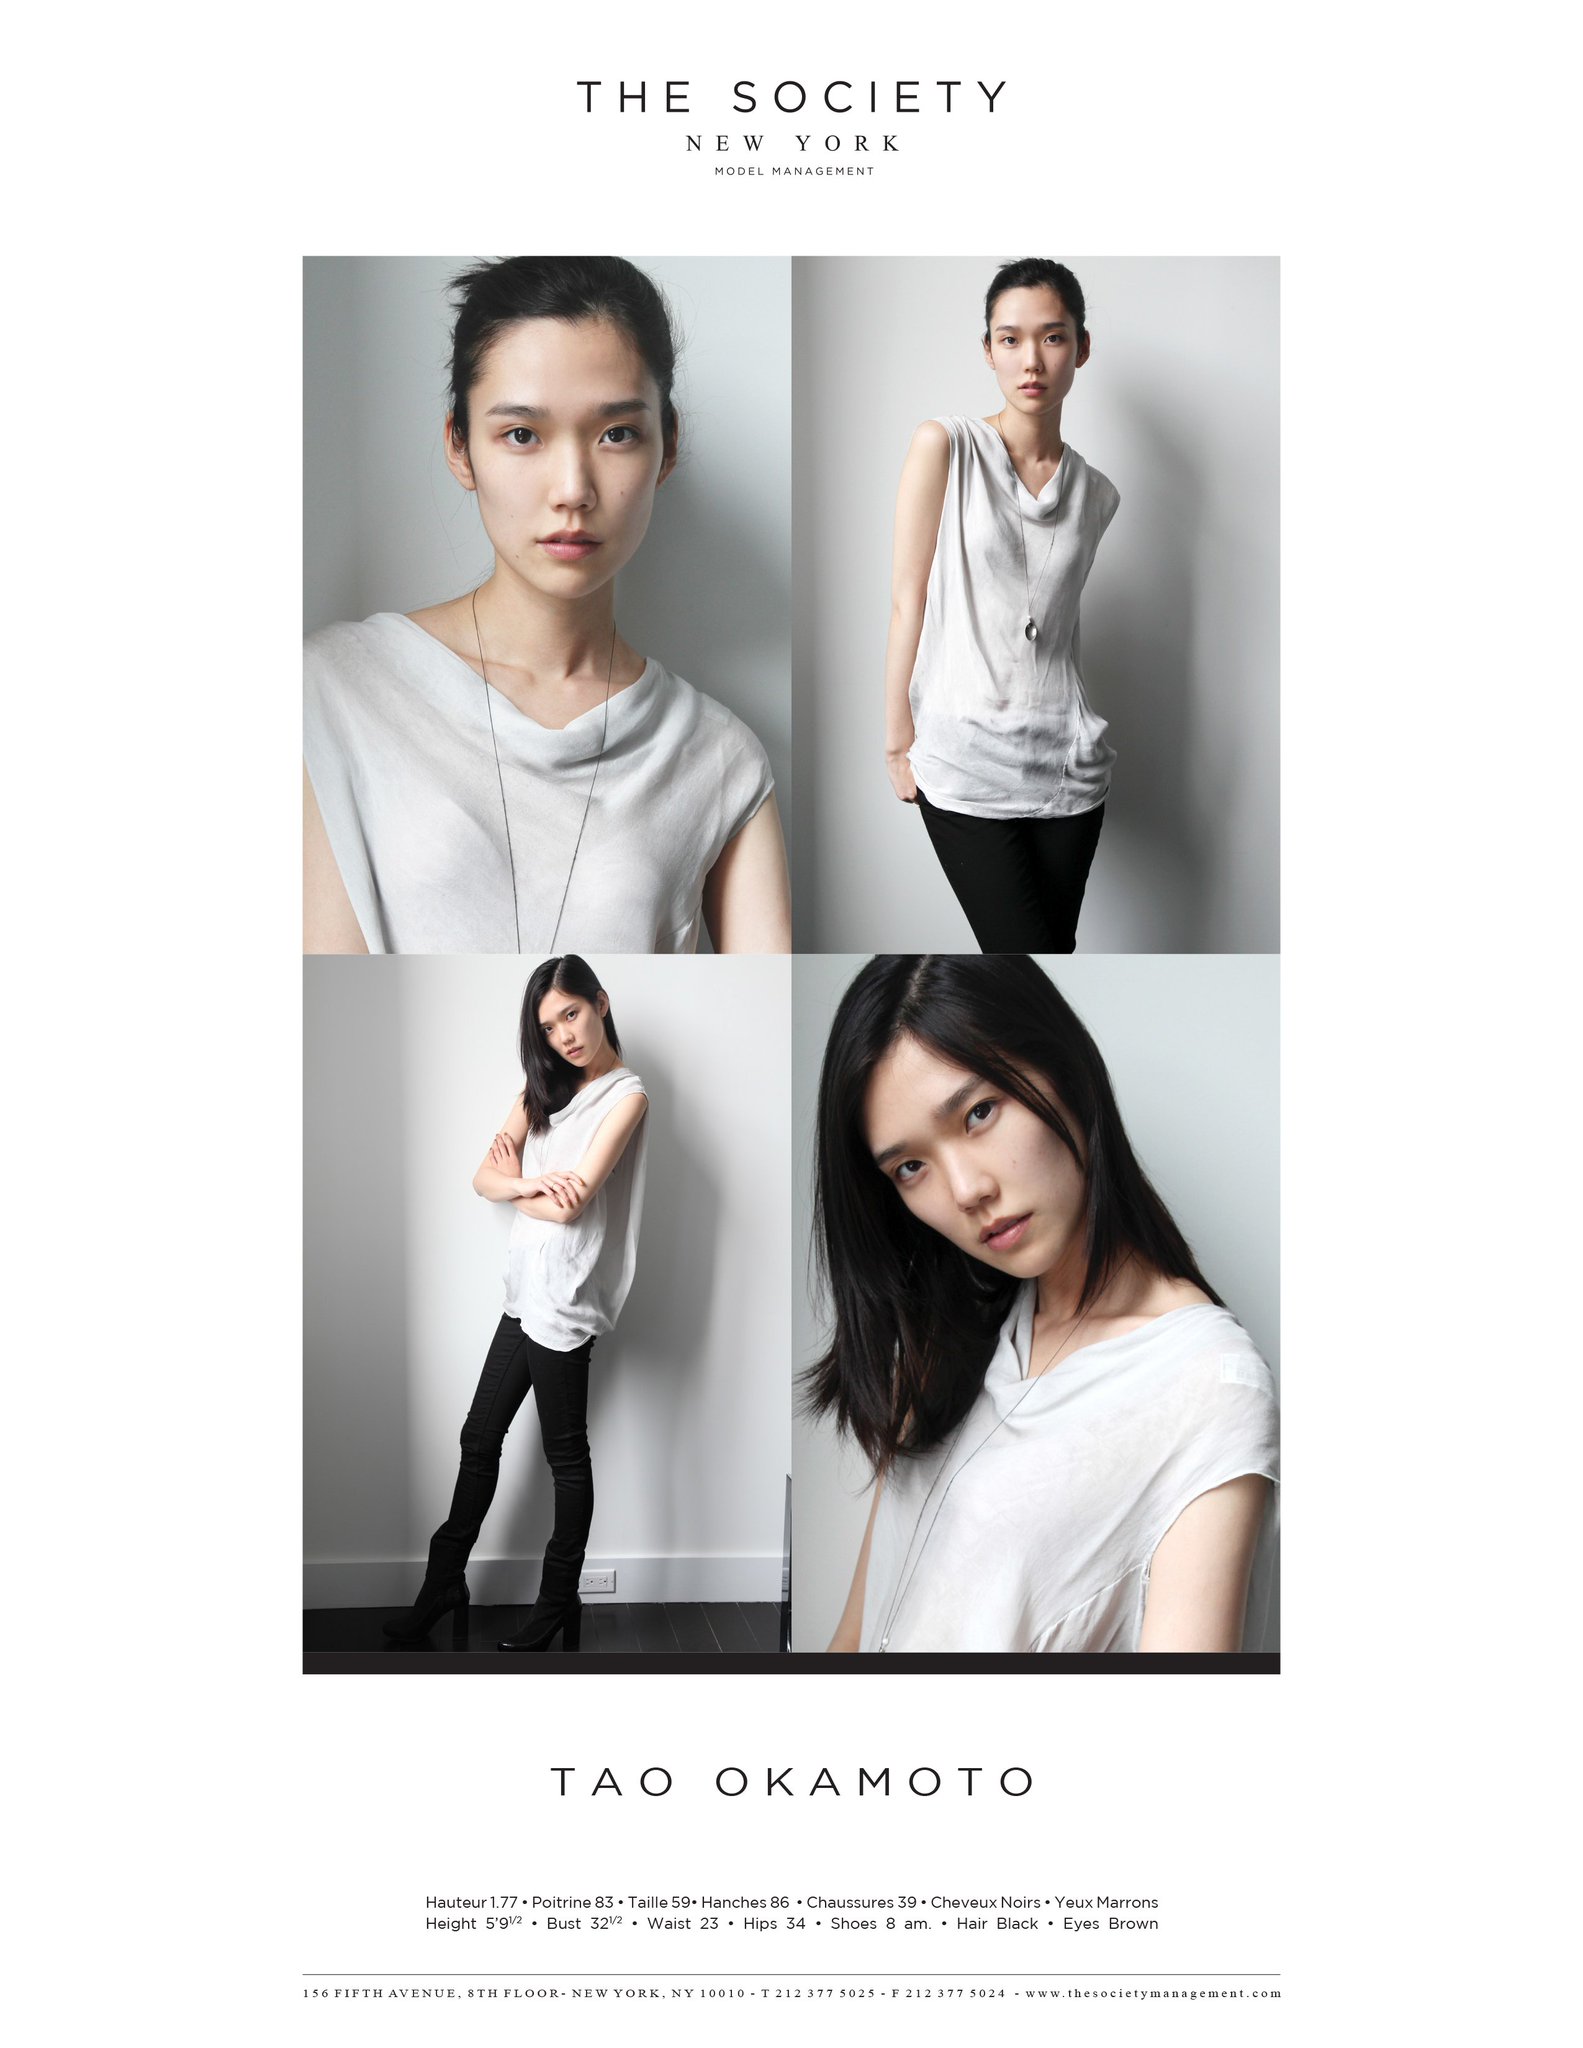  Happy birthday to the stunning Tao Okamoto! 